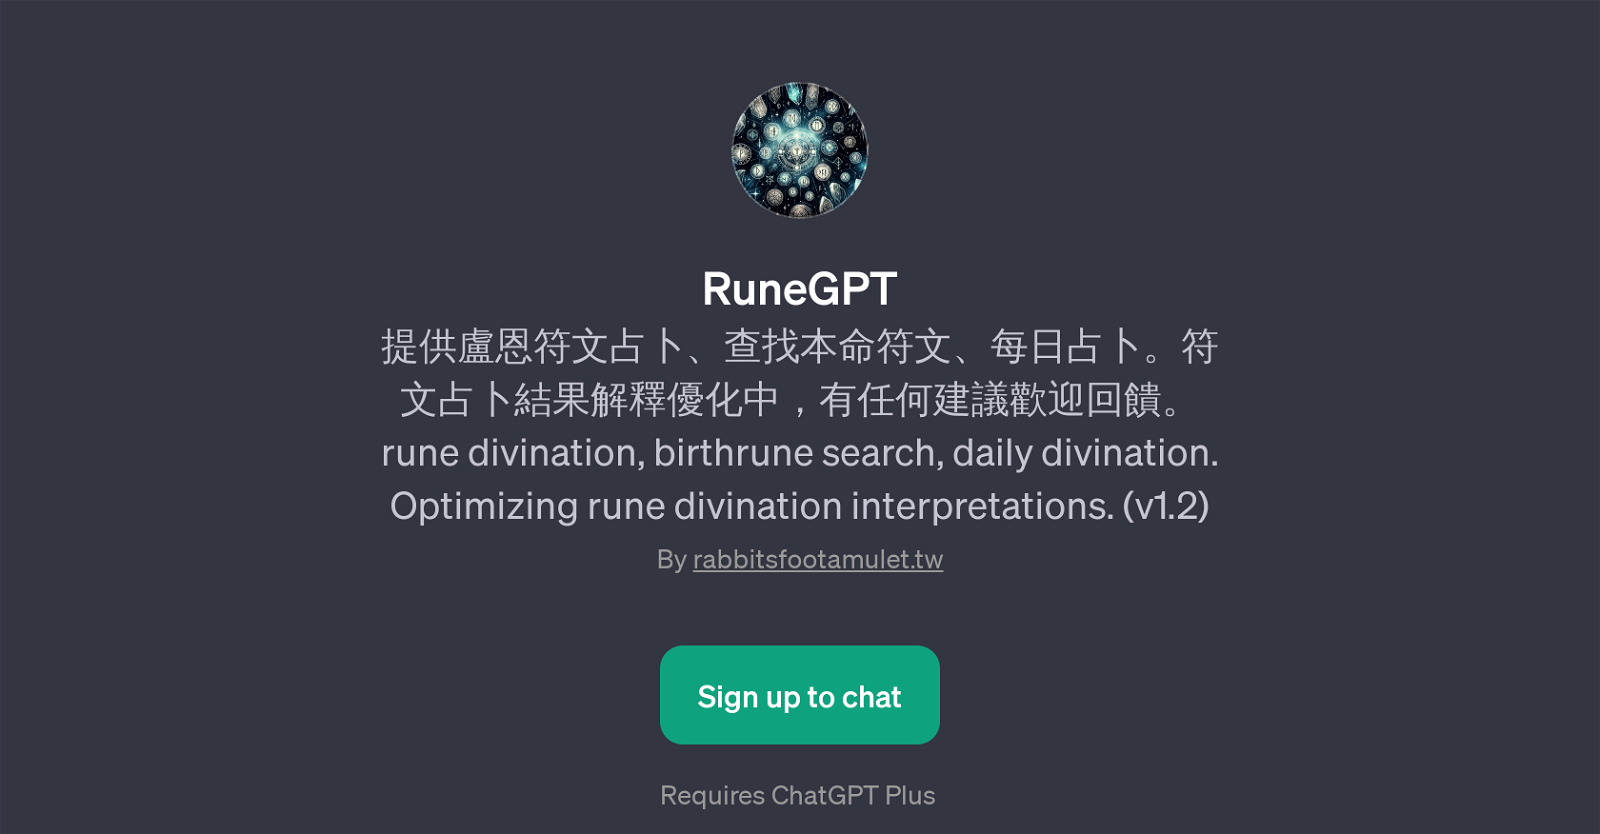 RuneGPT website